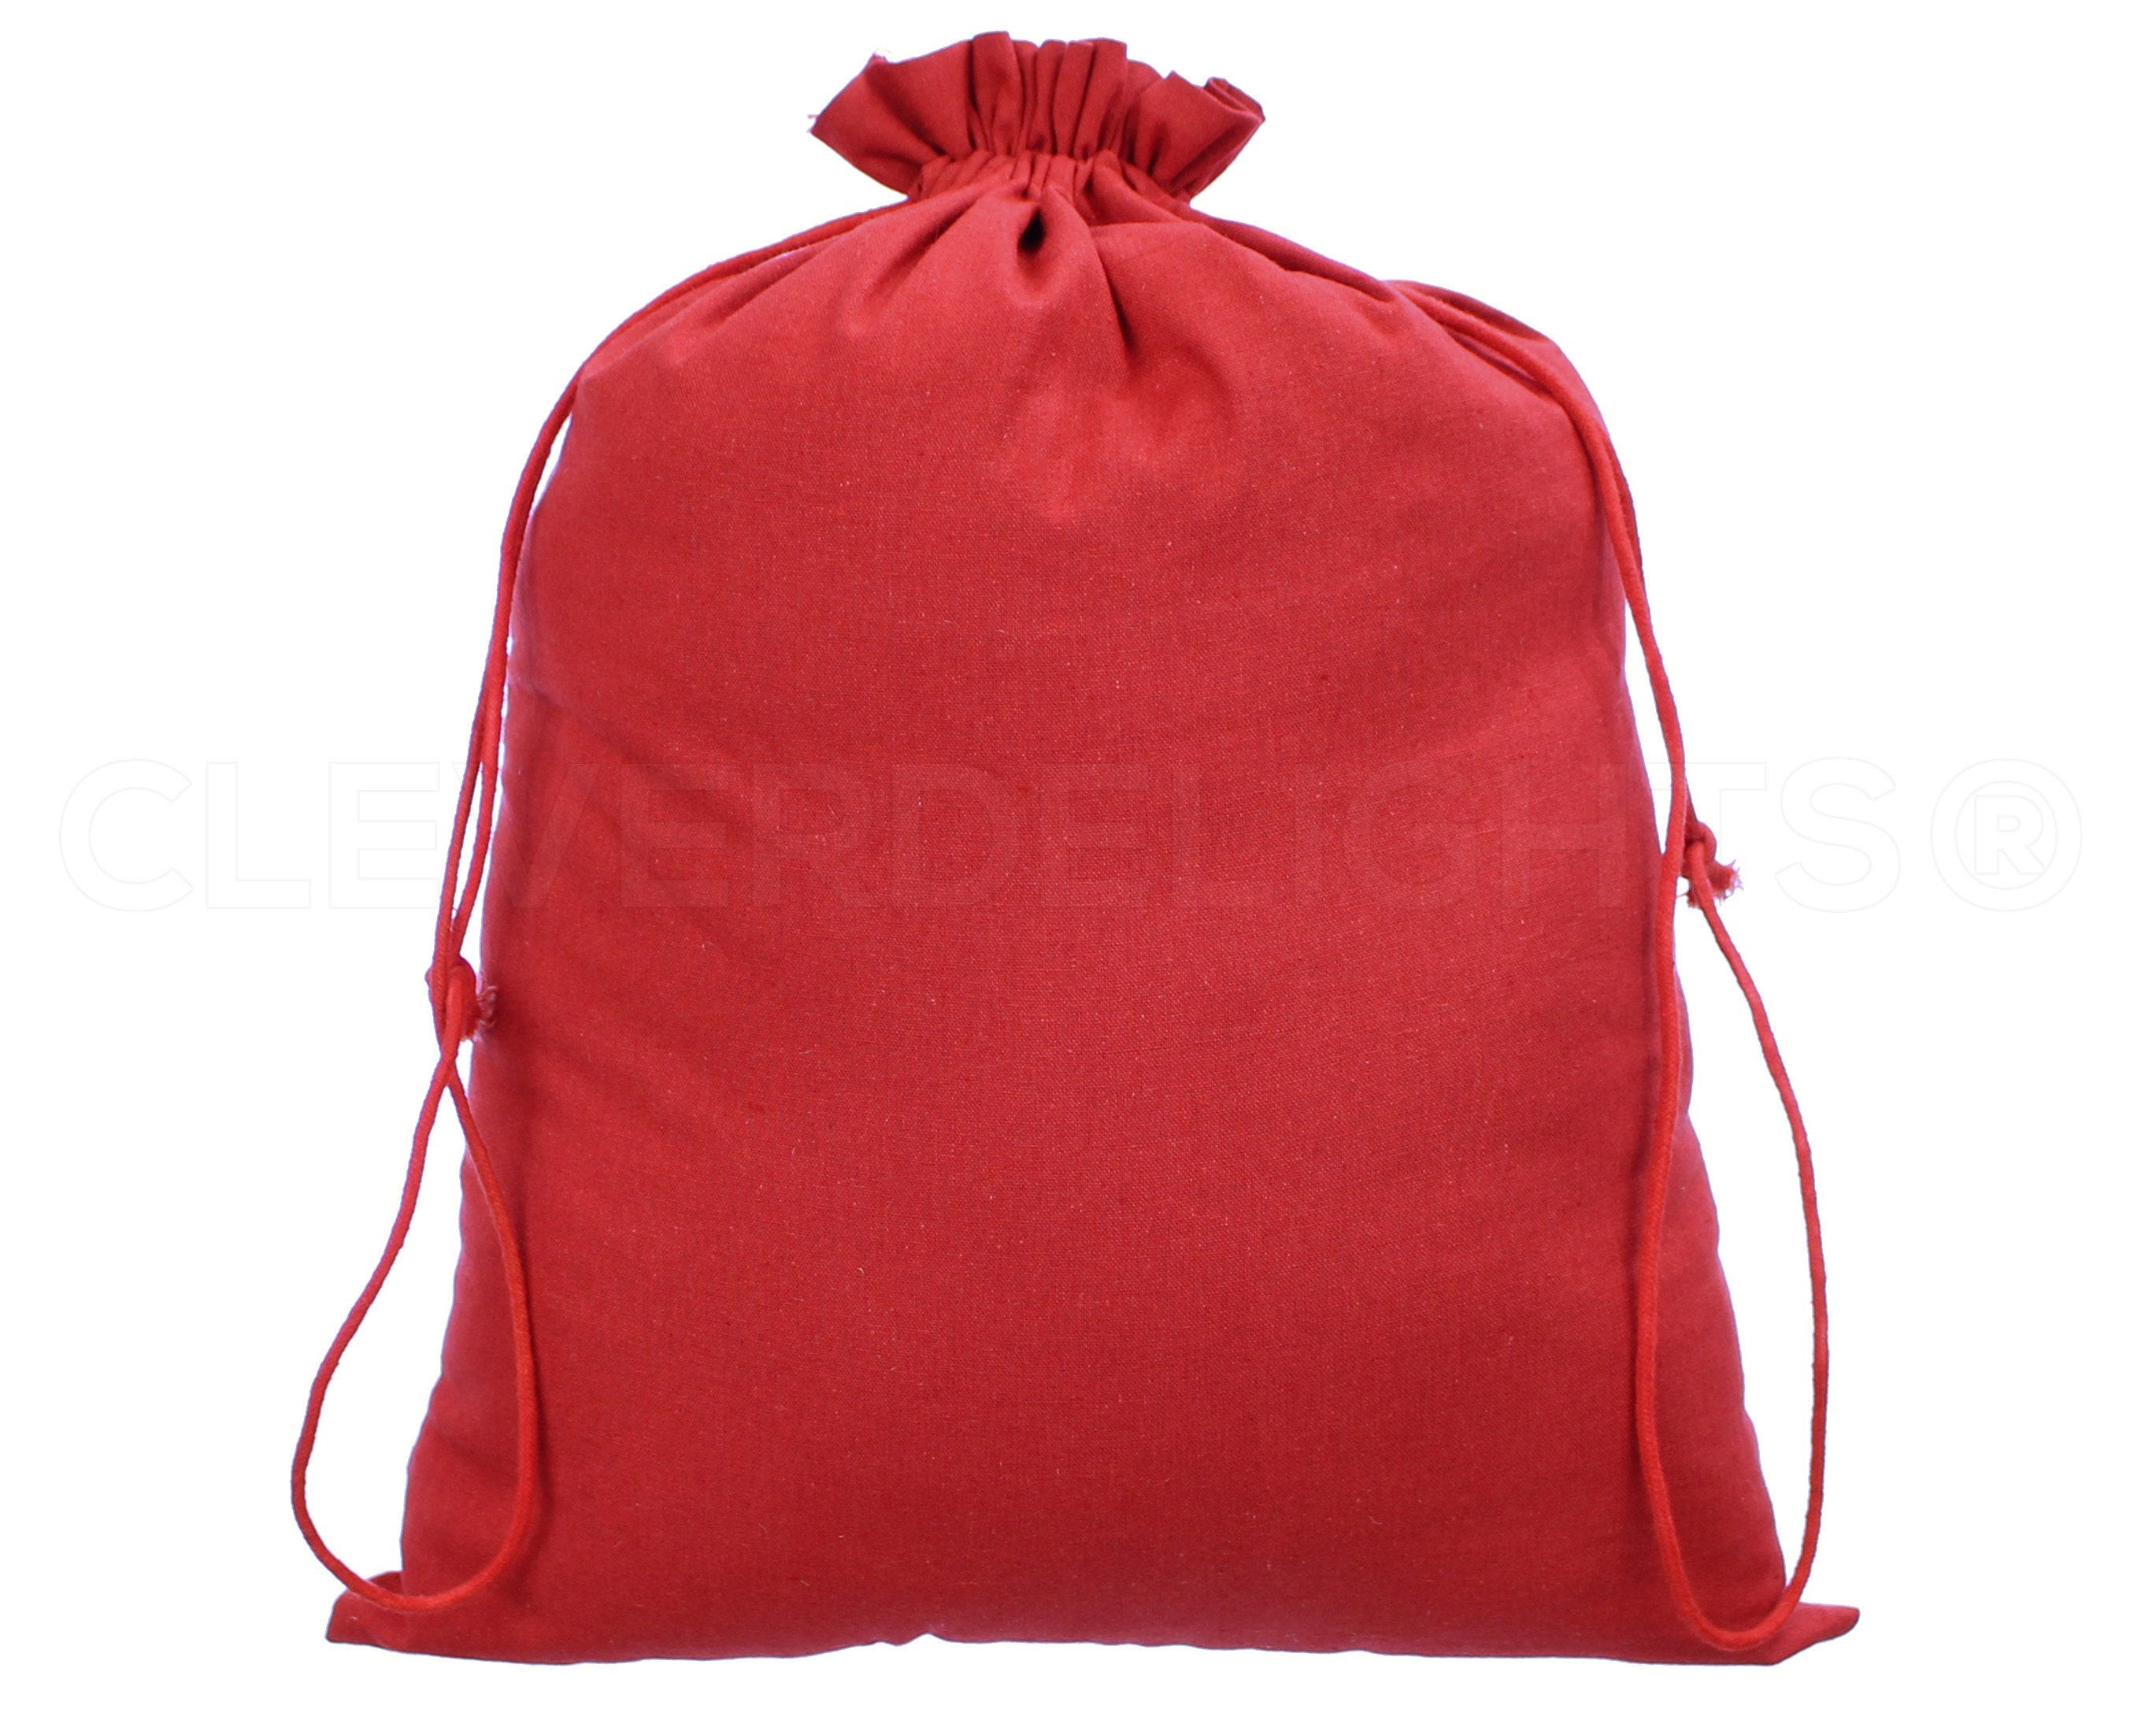 Biglotbags - 3 x 5 Inches Premium 100% Cotton Double Drawstring Muslin Bags